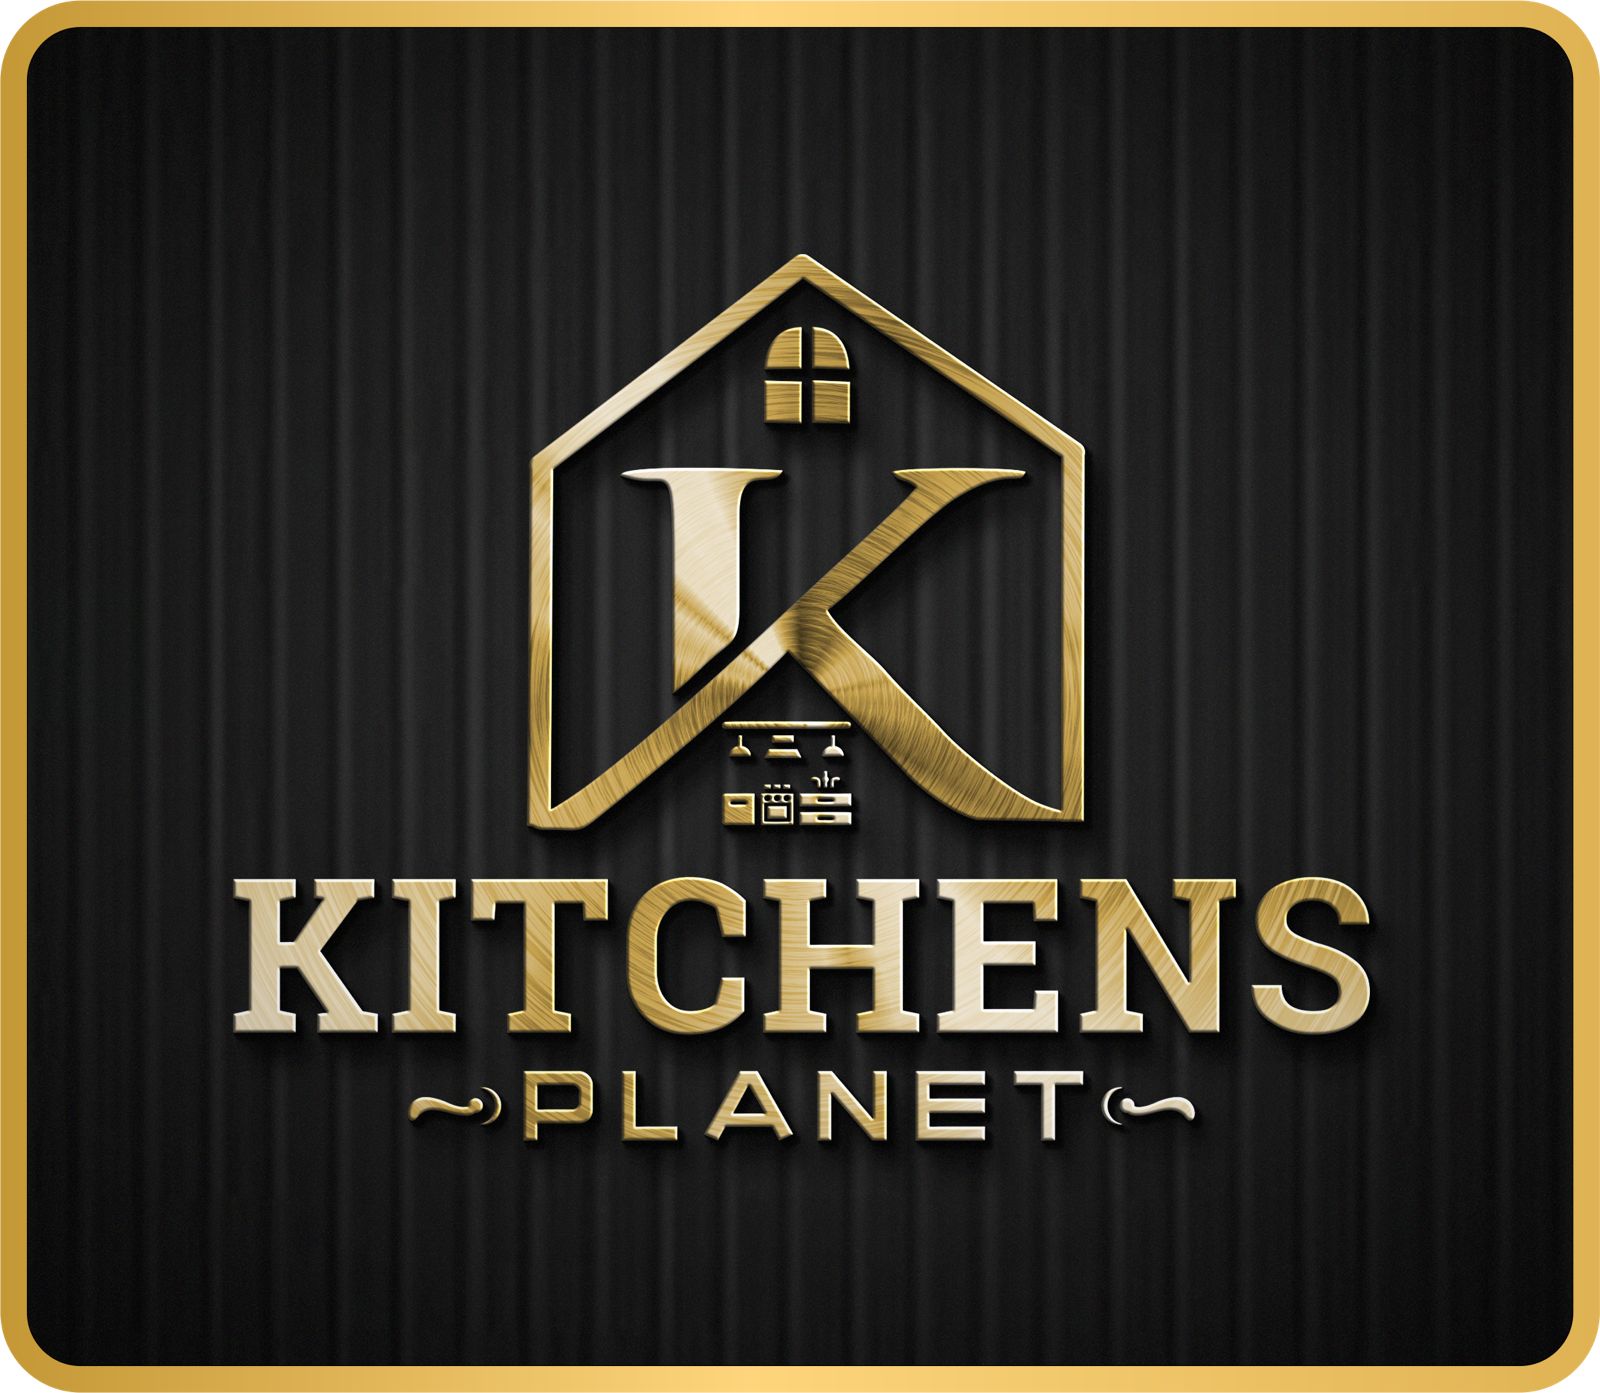 Kitchens Planet